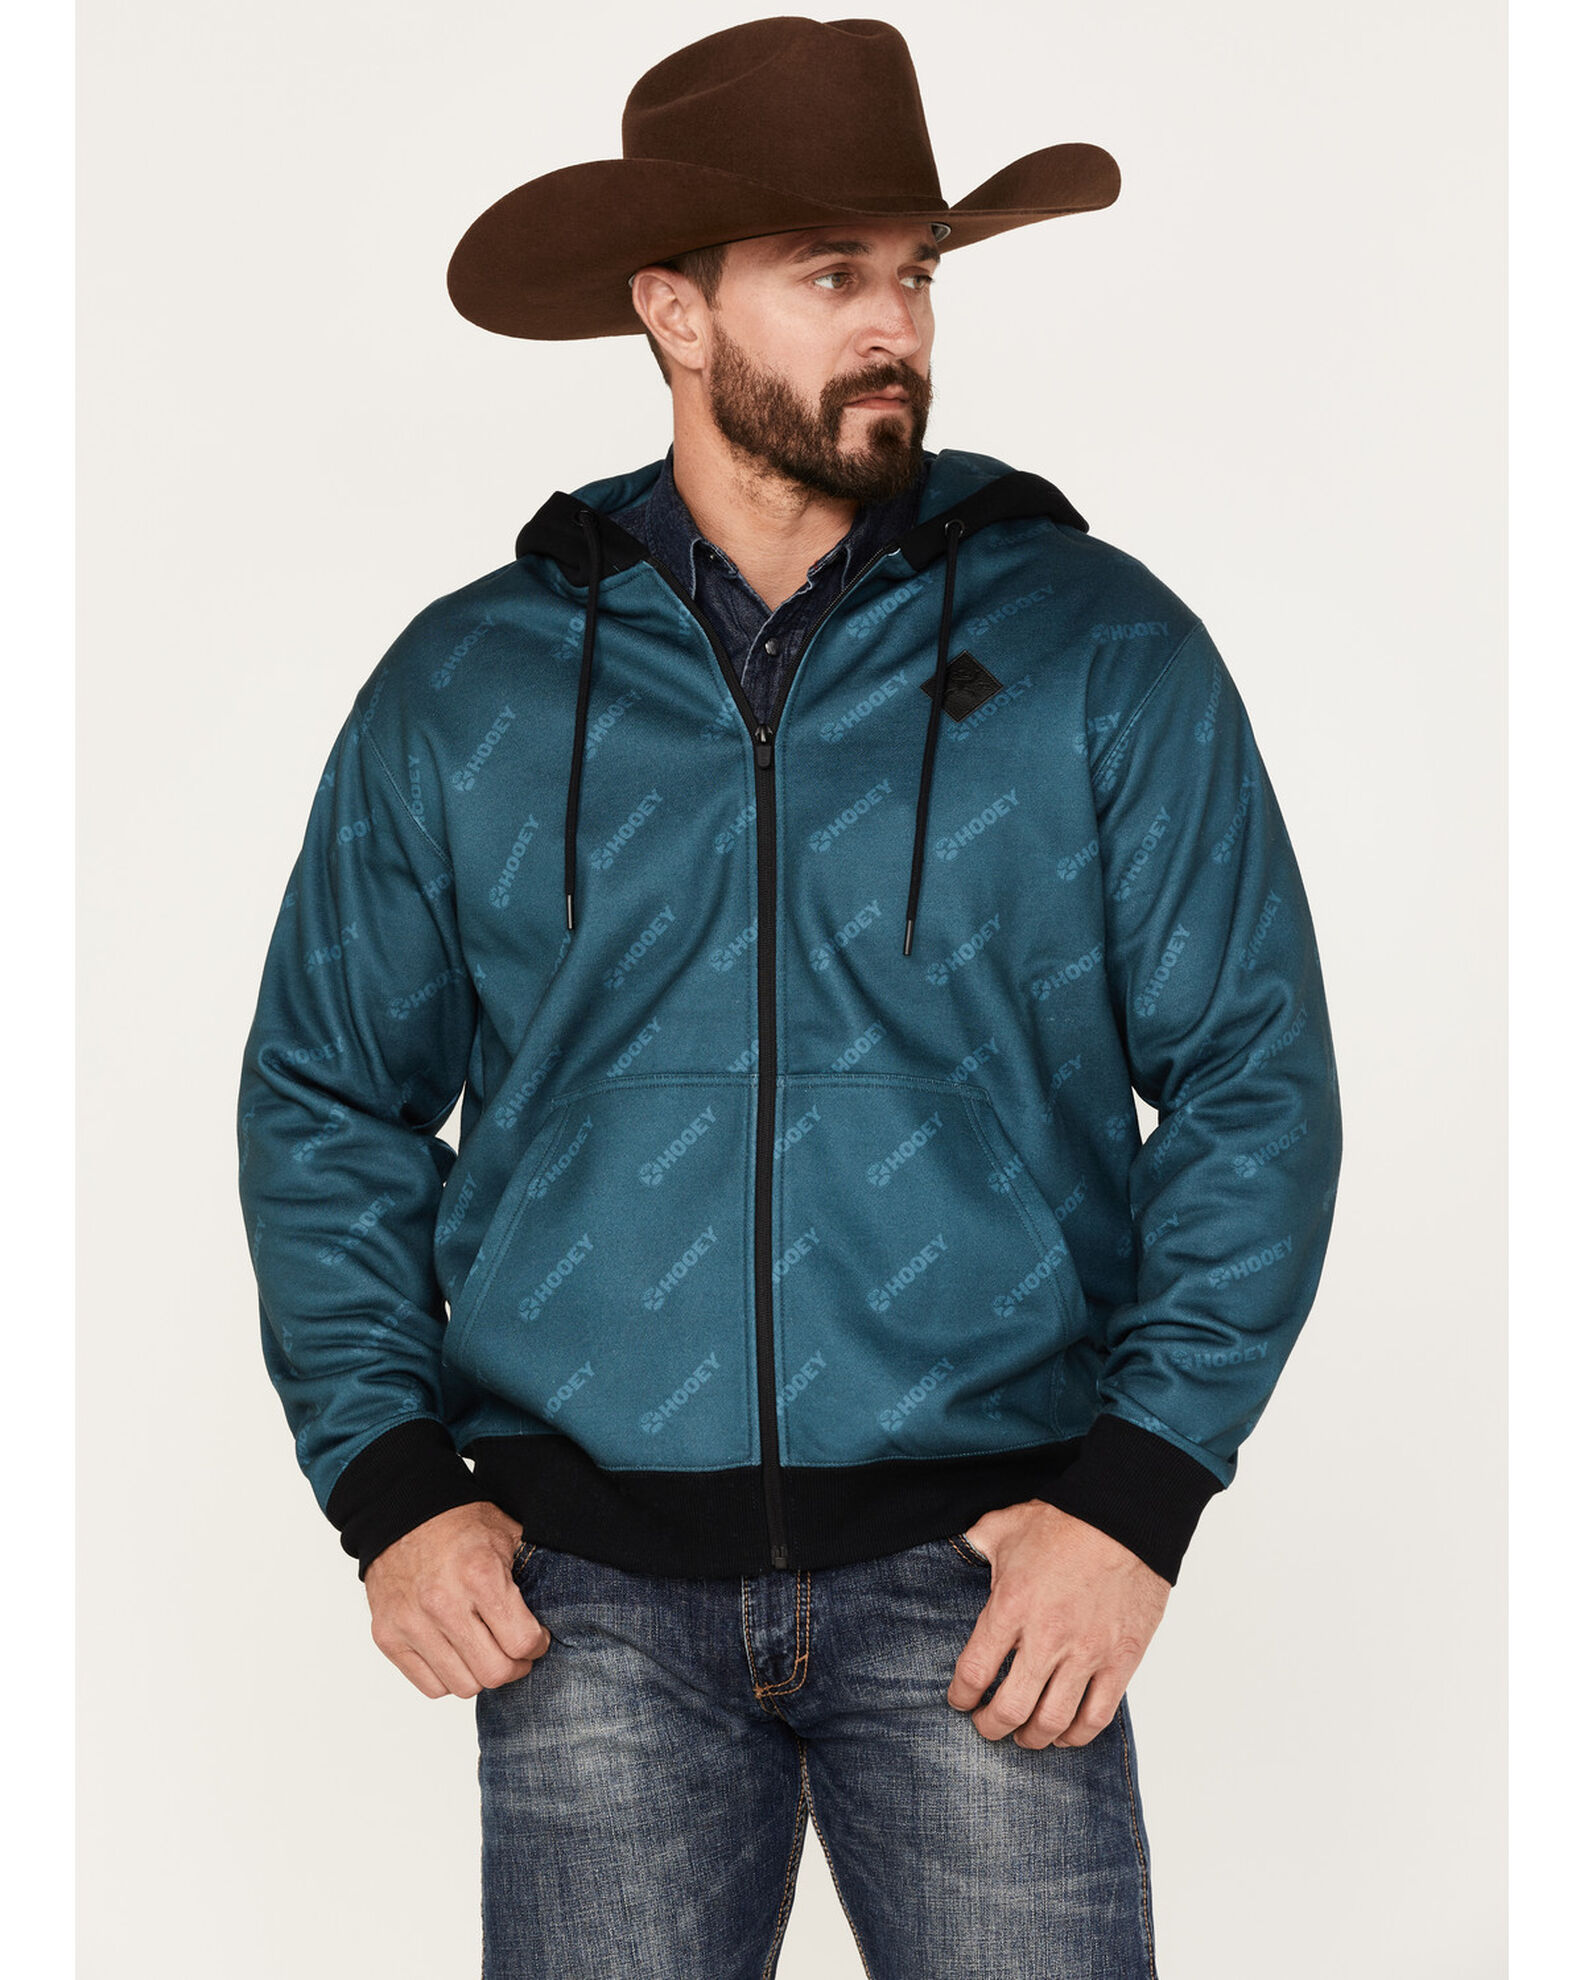 Hooey Men's Butte Full-Zip Hooded Jacket